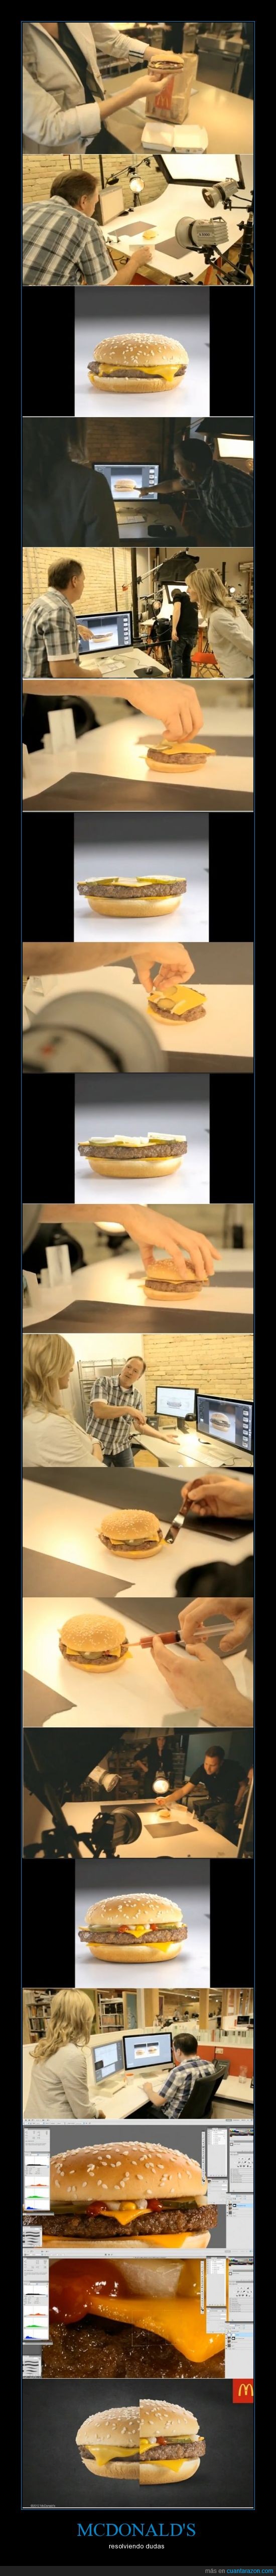 publicidad,McDonald's,hamburguesa,pinta,buena,imagen,foto,realidad,caja,montar